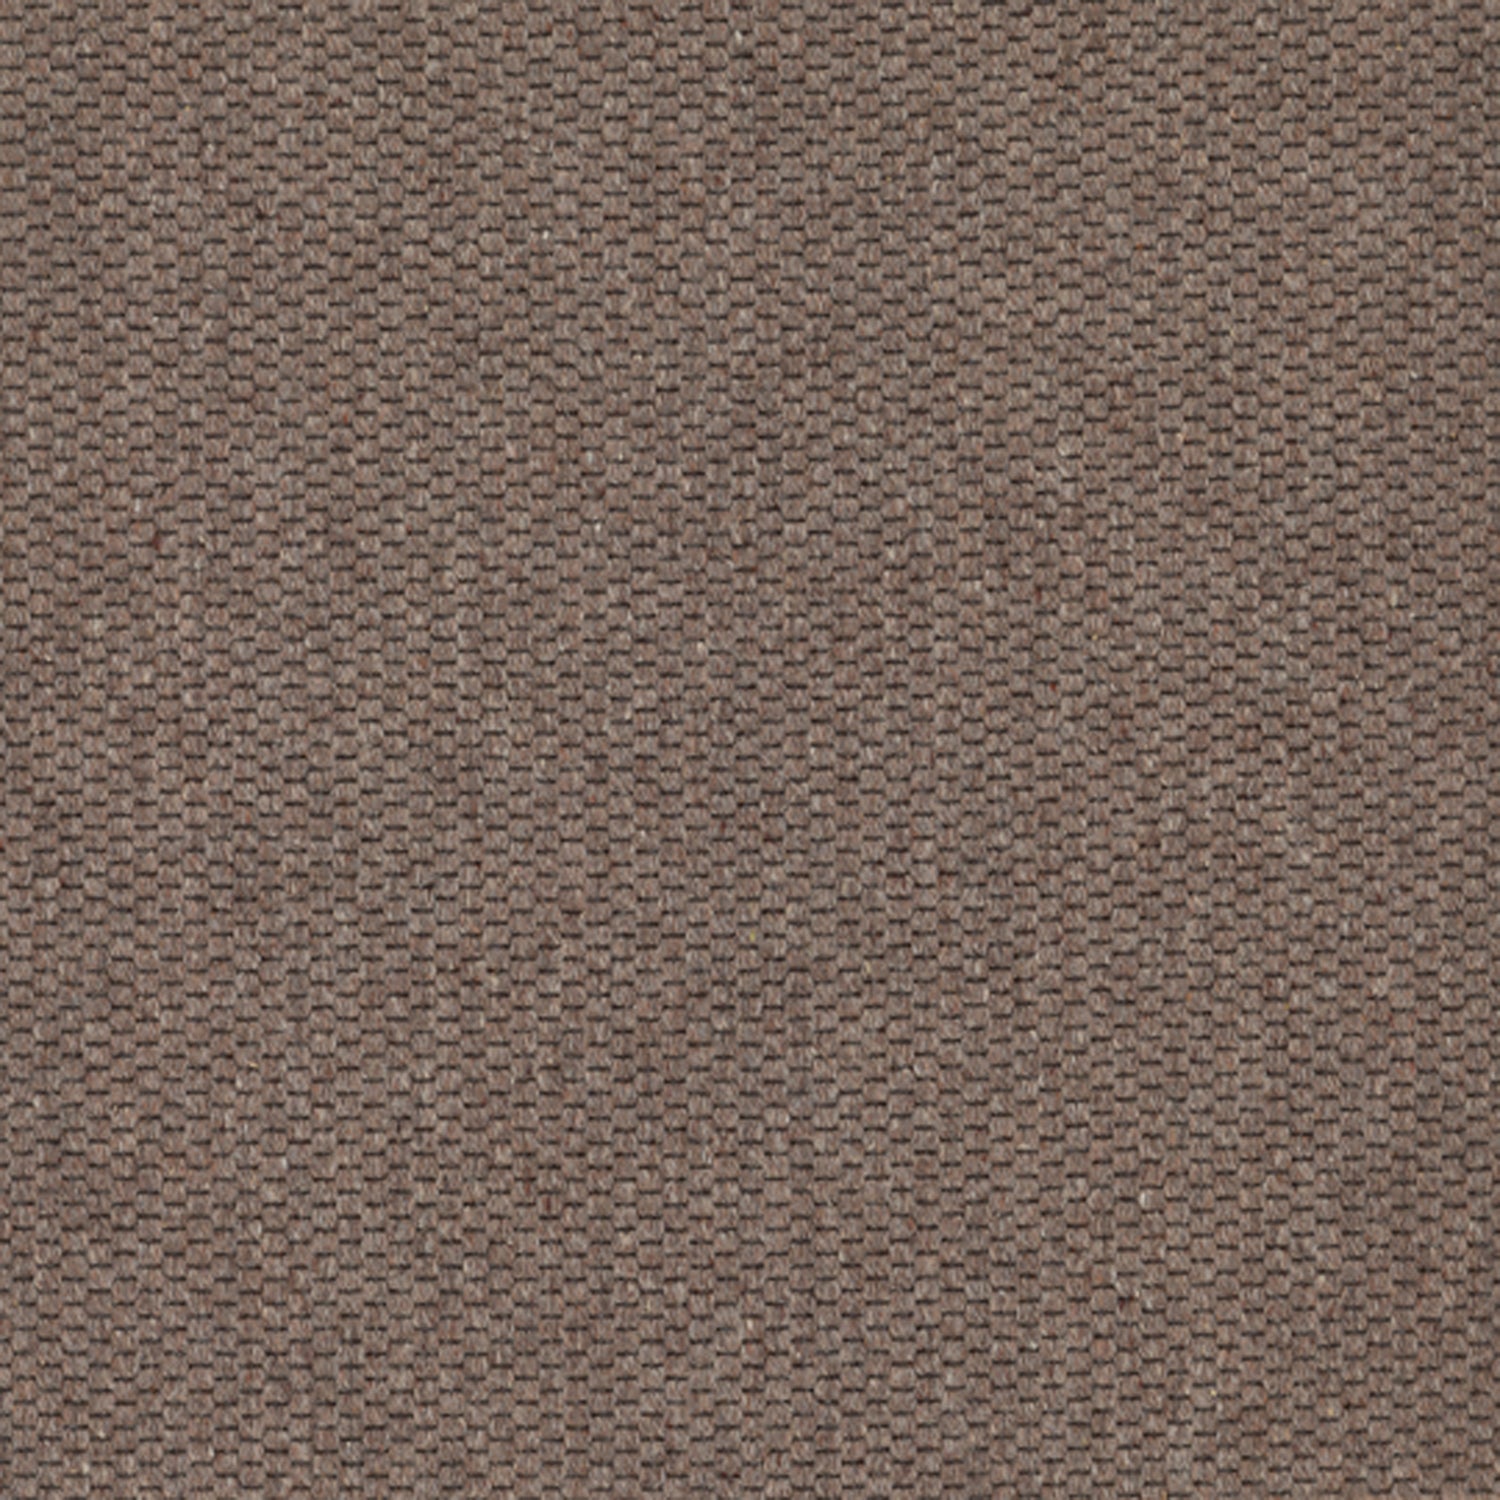 Wool broadloom carpet swatch in a flat grid weave in sable.